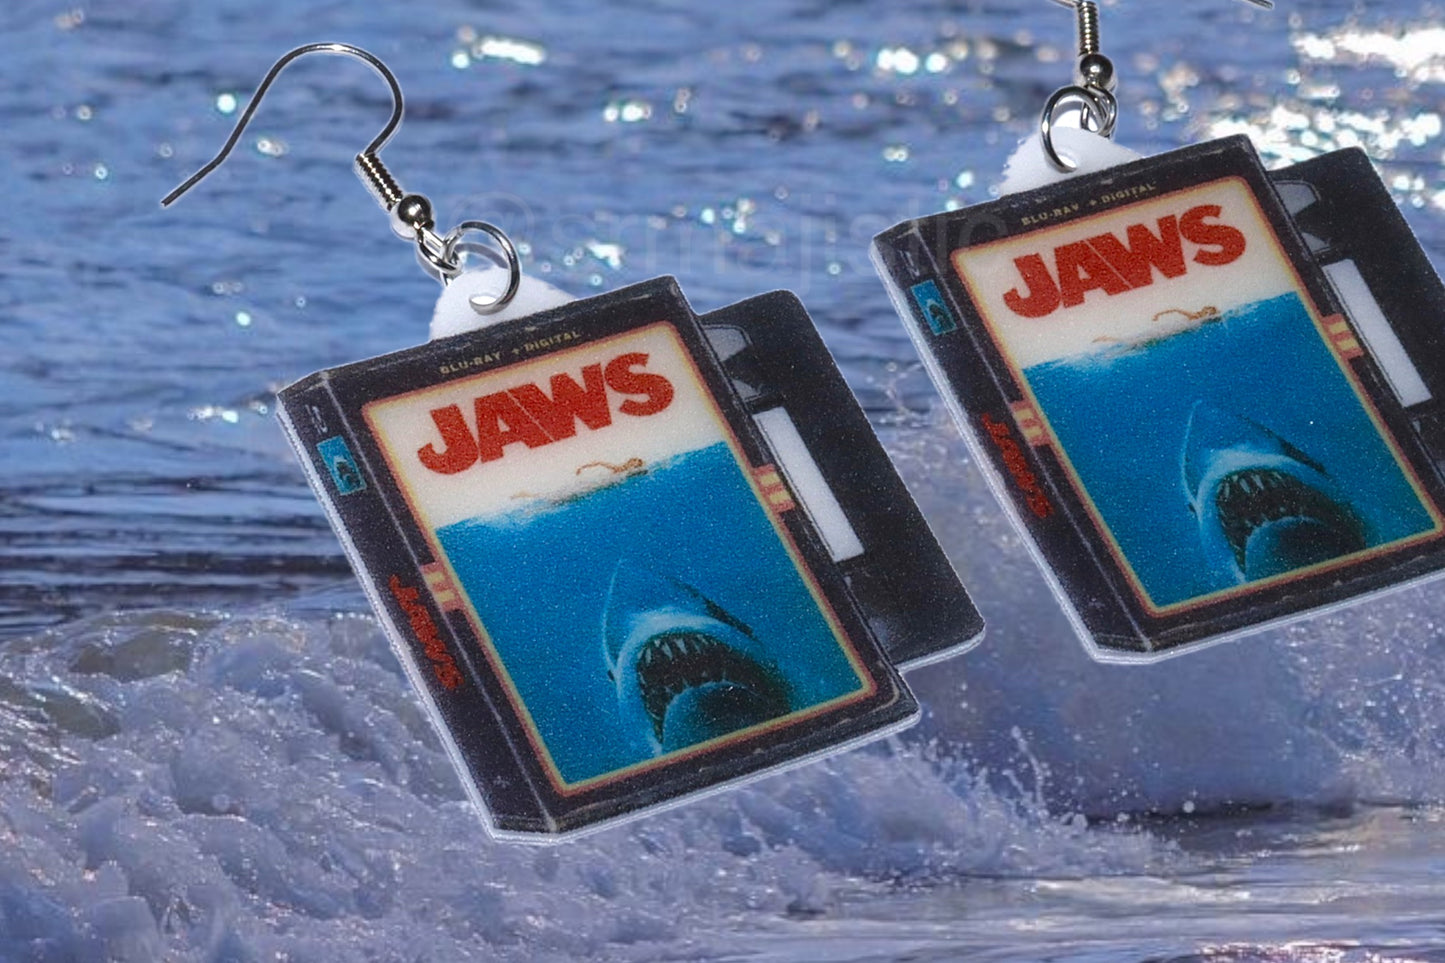 Jaws (1975) Movie VHS Tape 2D detailed Handmade Earrings!